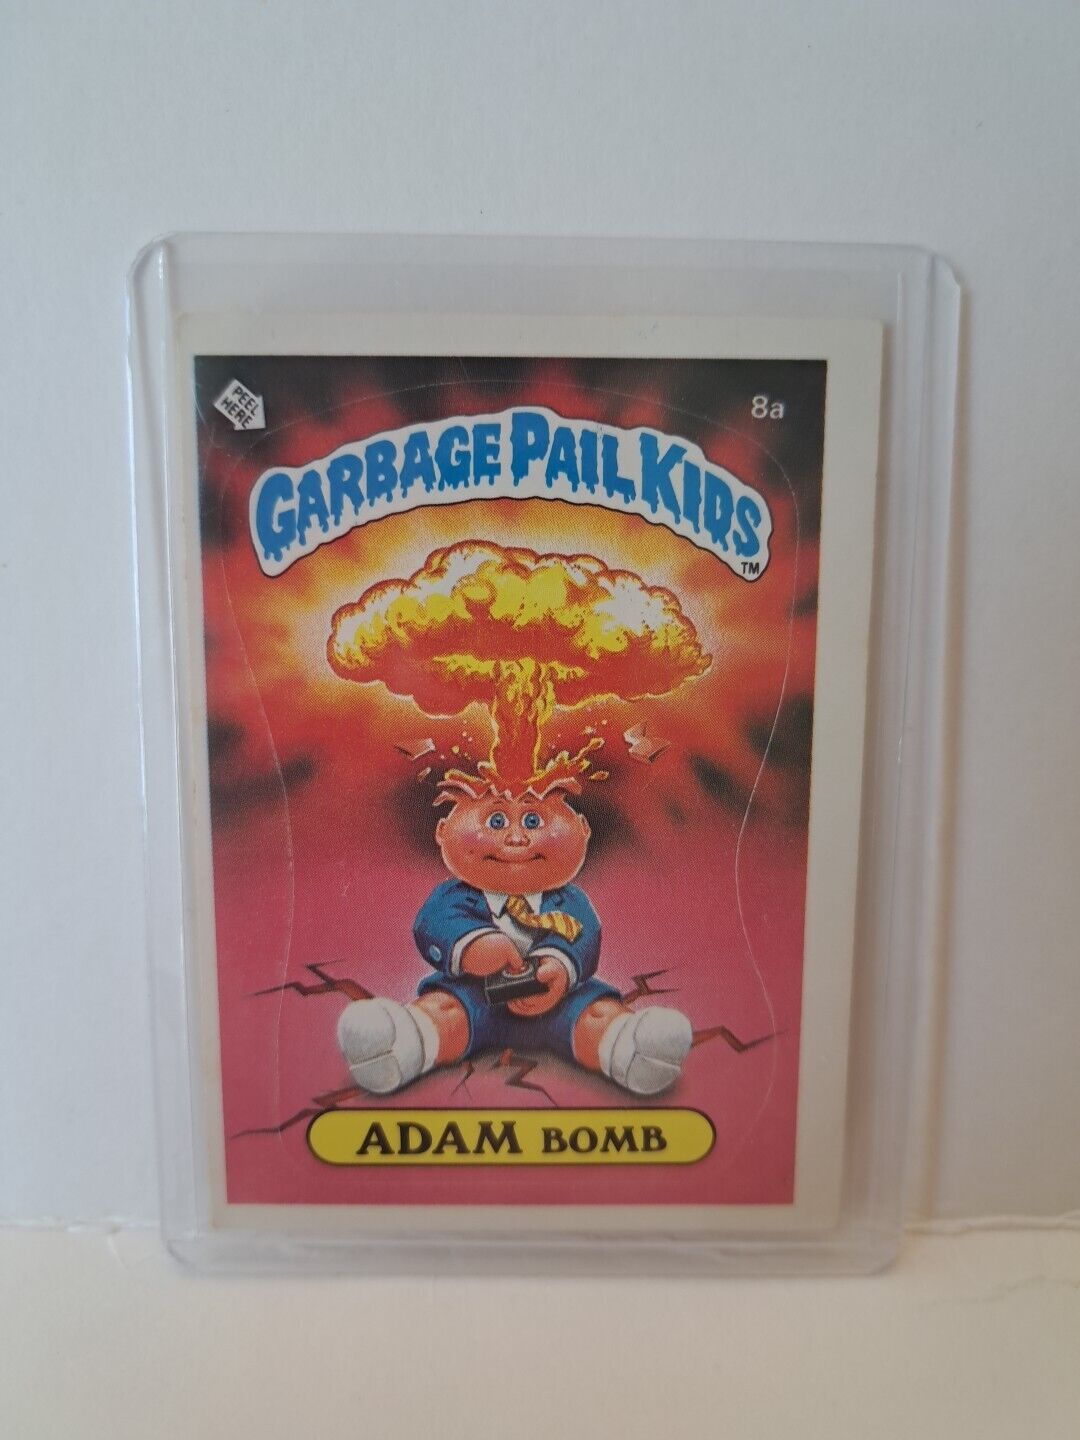 1985 Garbage Pail Kids - Atom Bomb #8a Trading Card